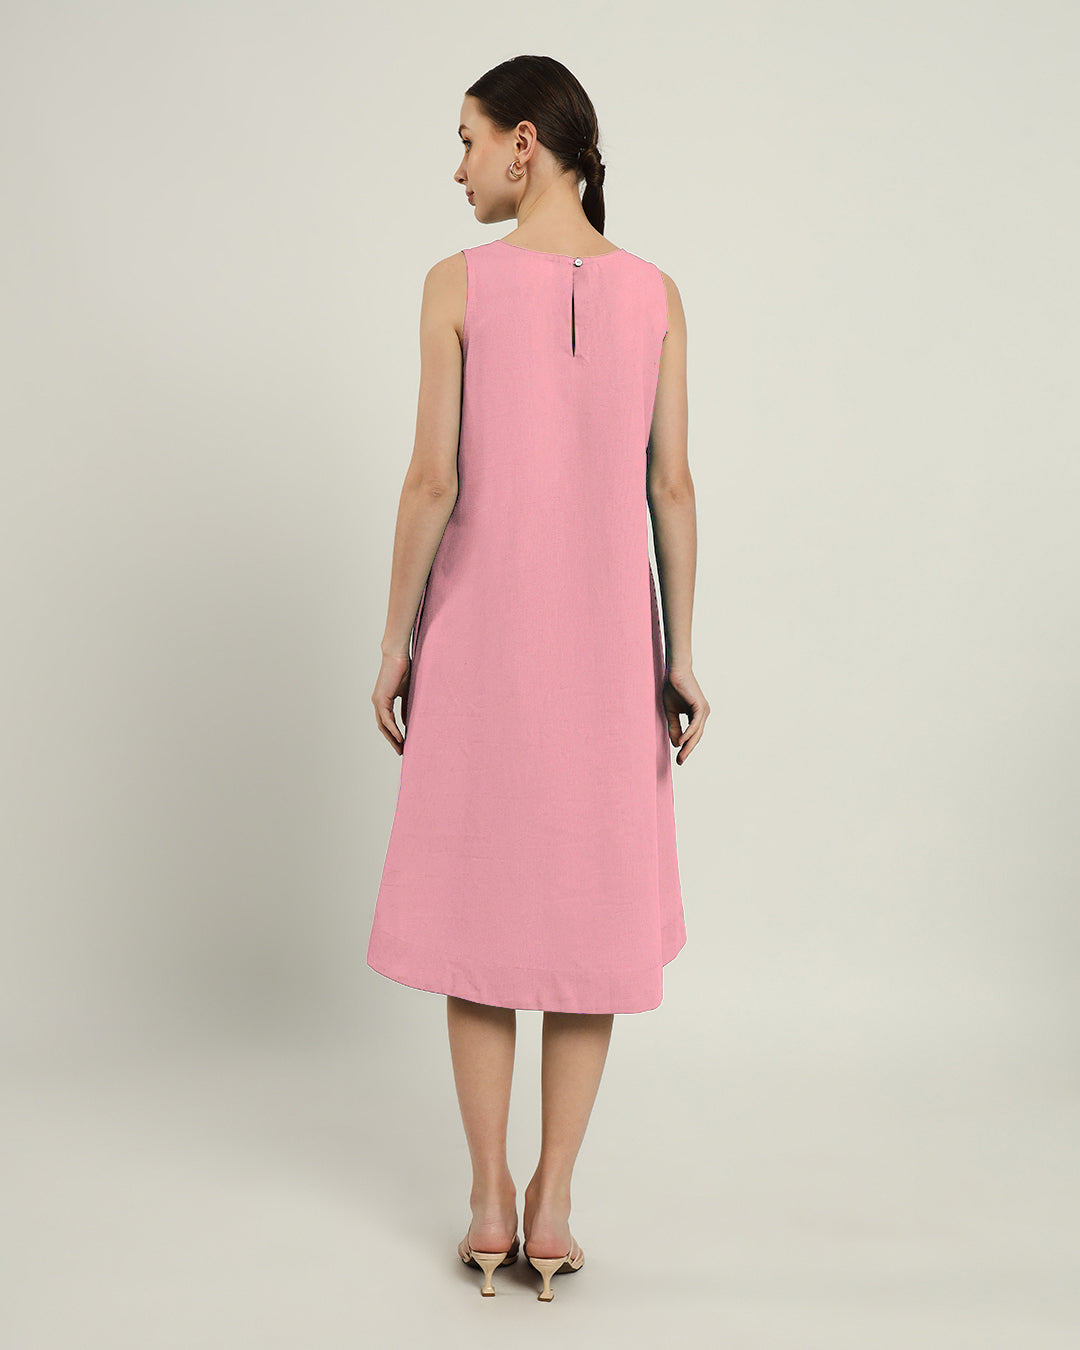 The Odesa Fondant Pink Cotton Dress